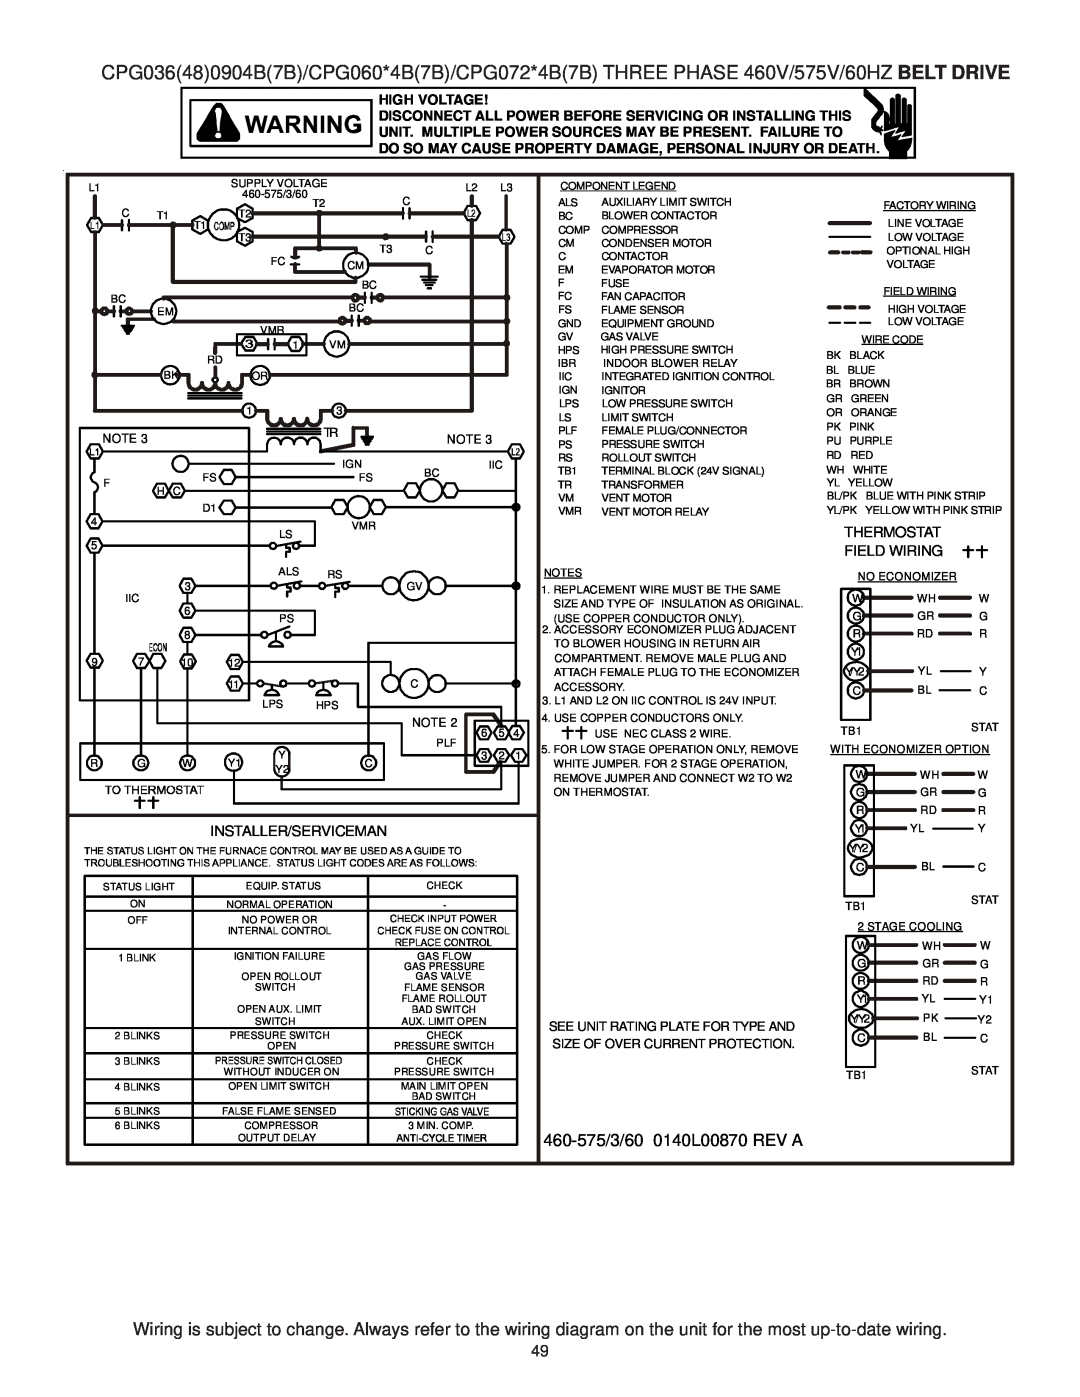 Goodman Mfg CPG SERIES installation manual 460-575/3/600140L00870 REV A, Installer/Serviceman, Thermostat, Field Wiring 